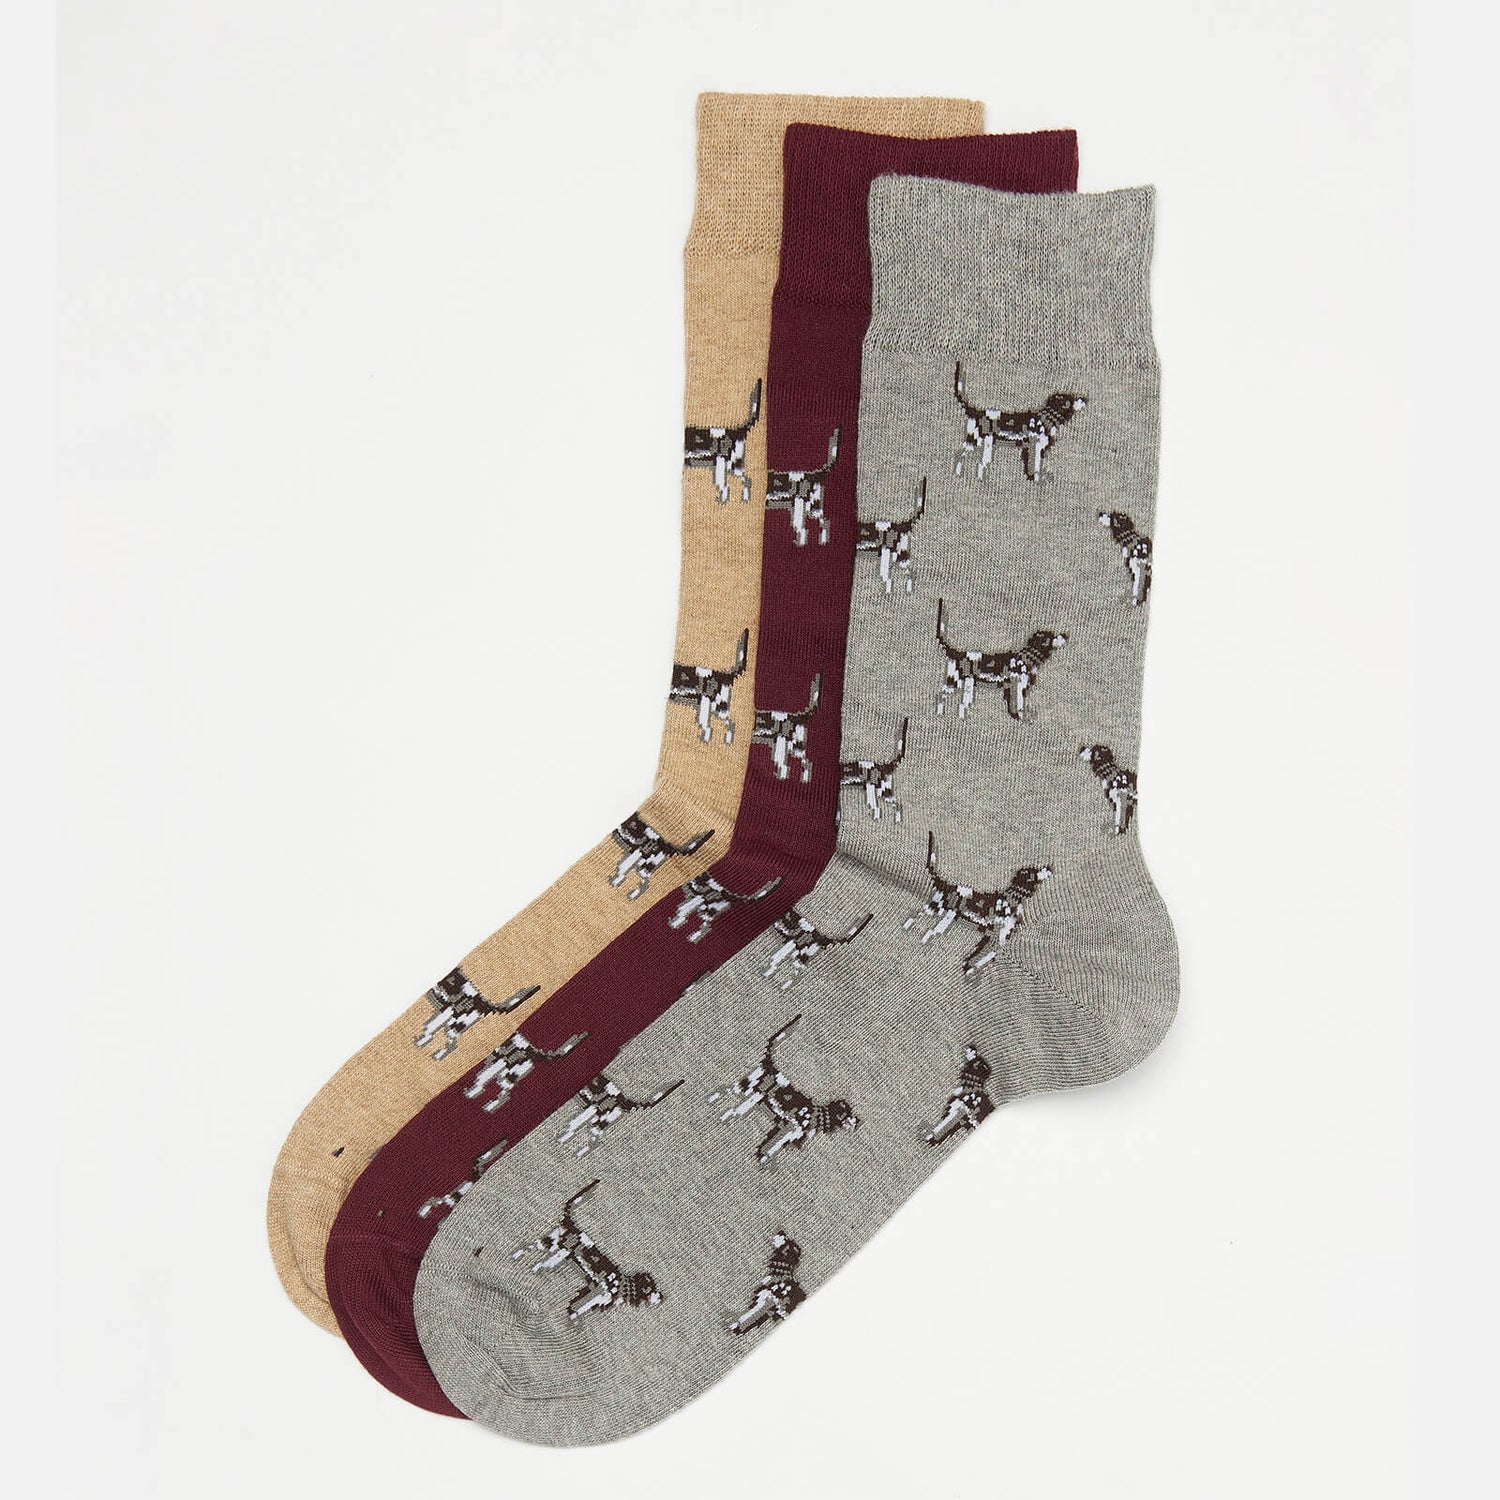 Barbour Heritage Men's Pointer Dog Socks Gift Box - Winter Red